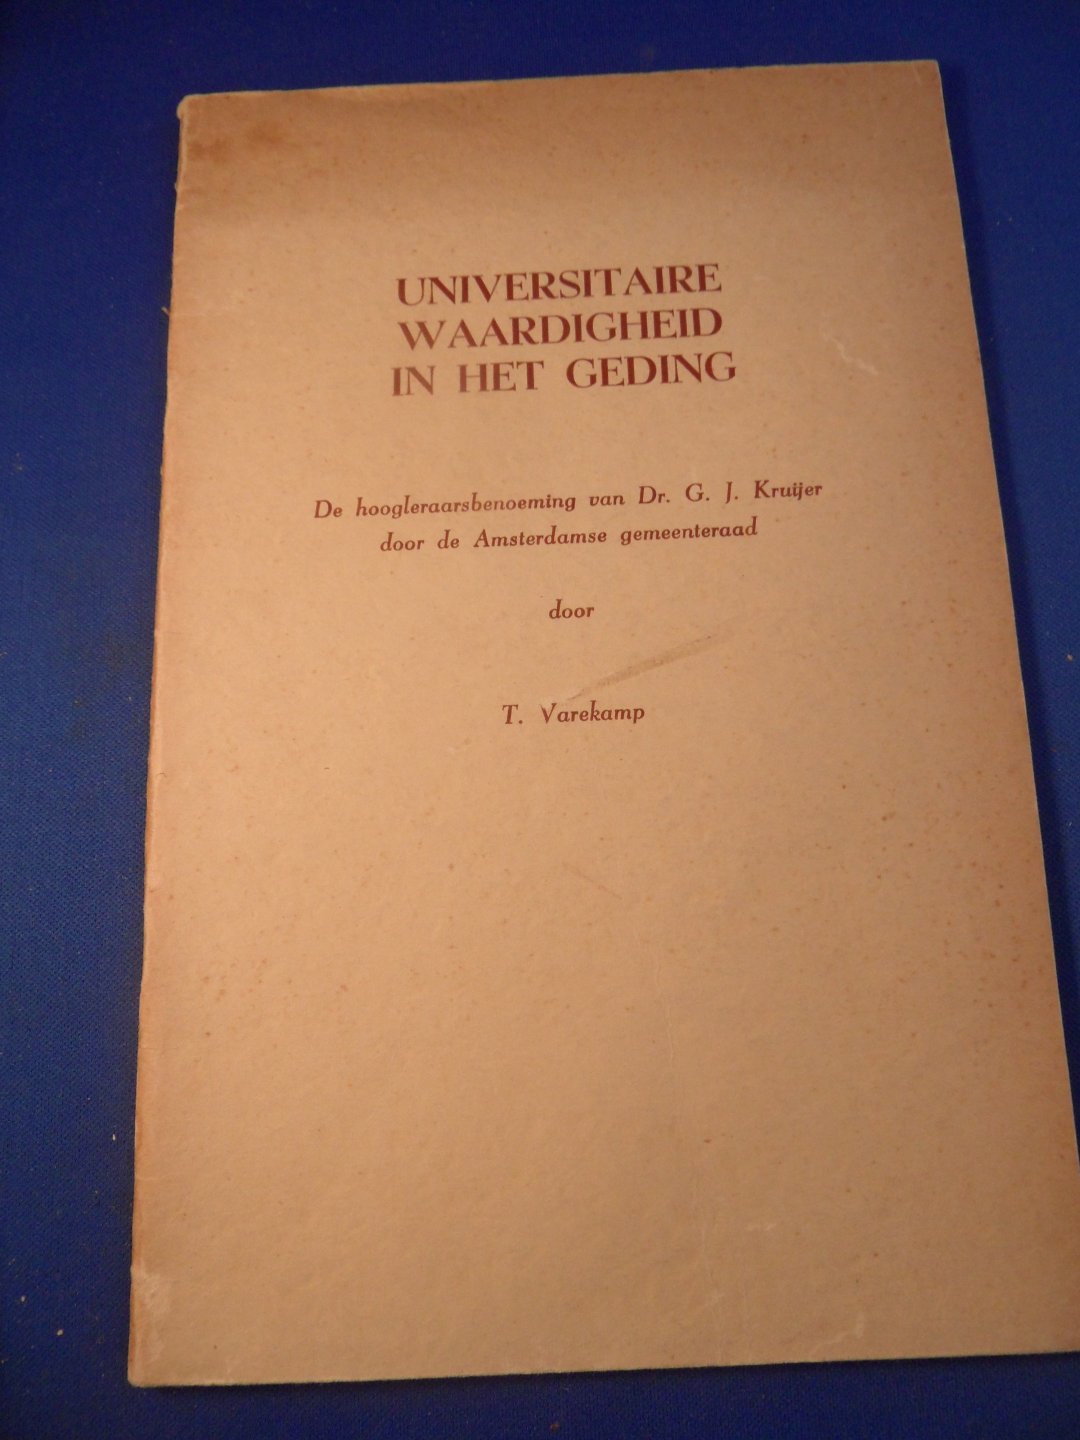 Varekamp, T. - Universitaire waardigheid in het geding. De hoogleraarsbenoeming van Dr. G.J. Kruijer door de Amsterdamse gemeenteraad.